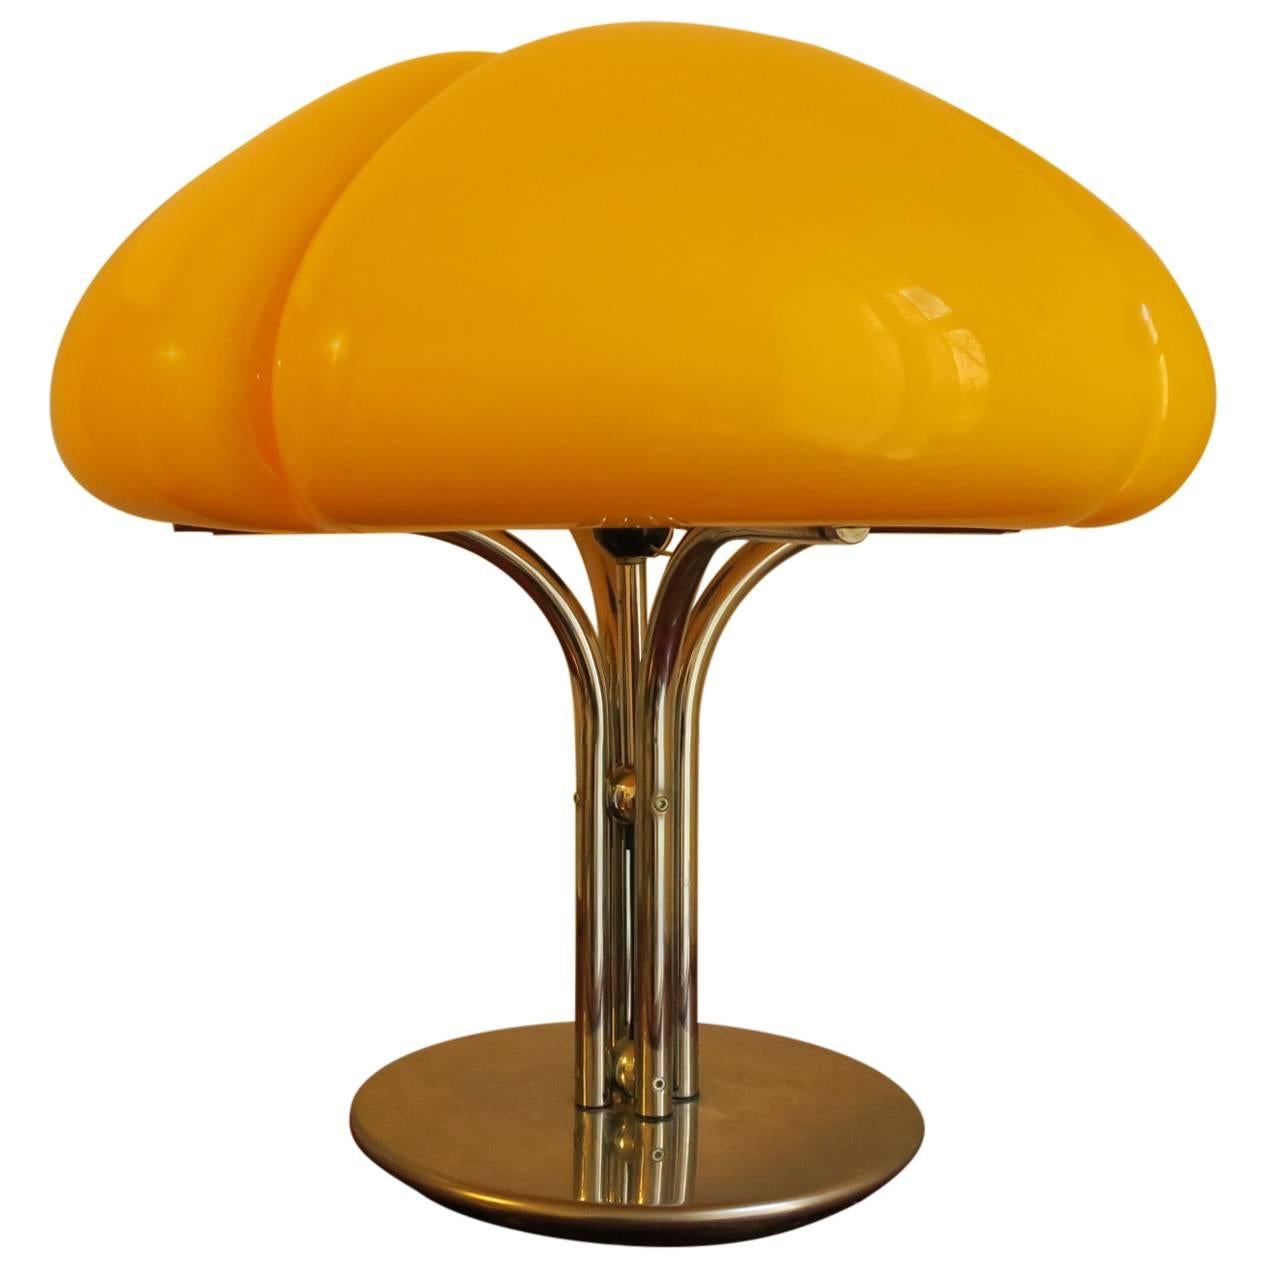 Gae Aulenti Quadrifoglio Table Lamp in Canary Yellow For Sale